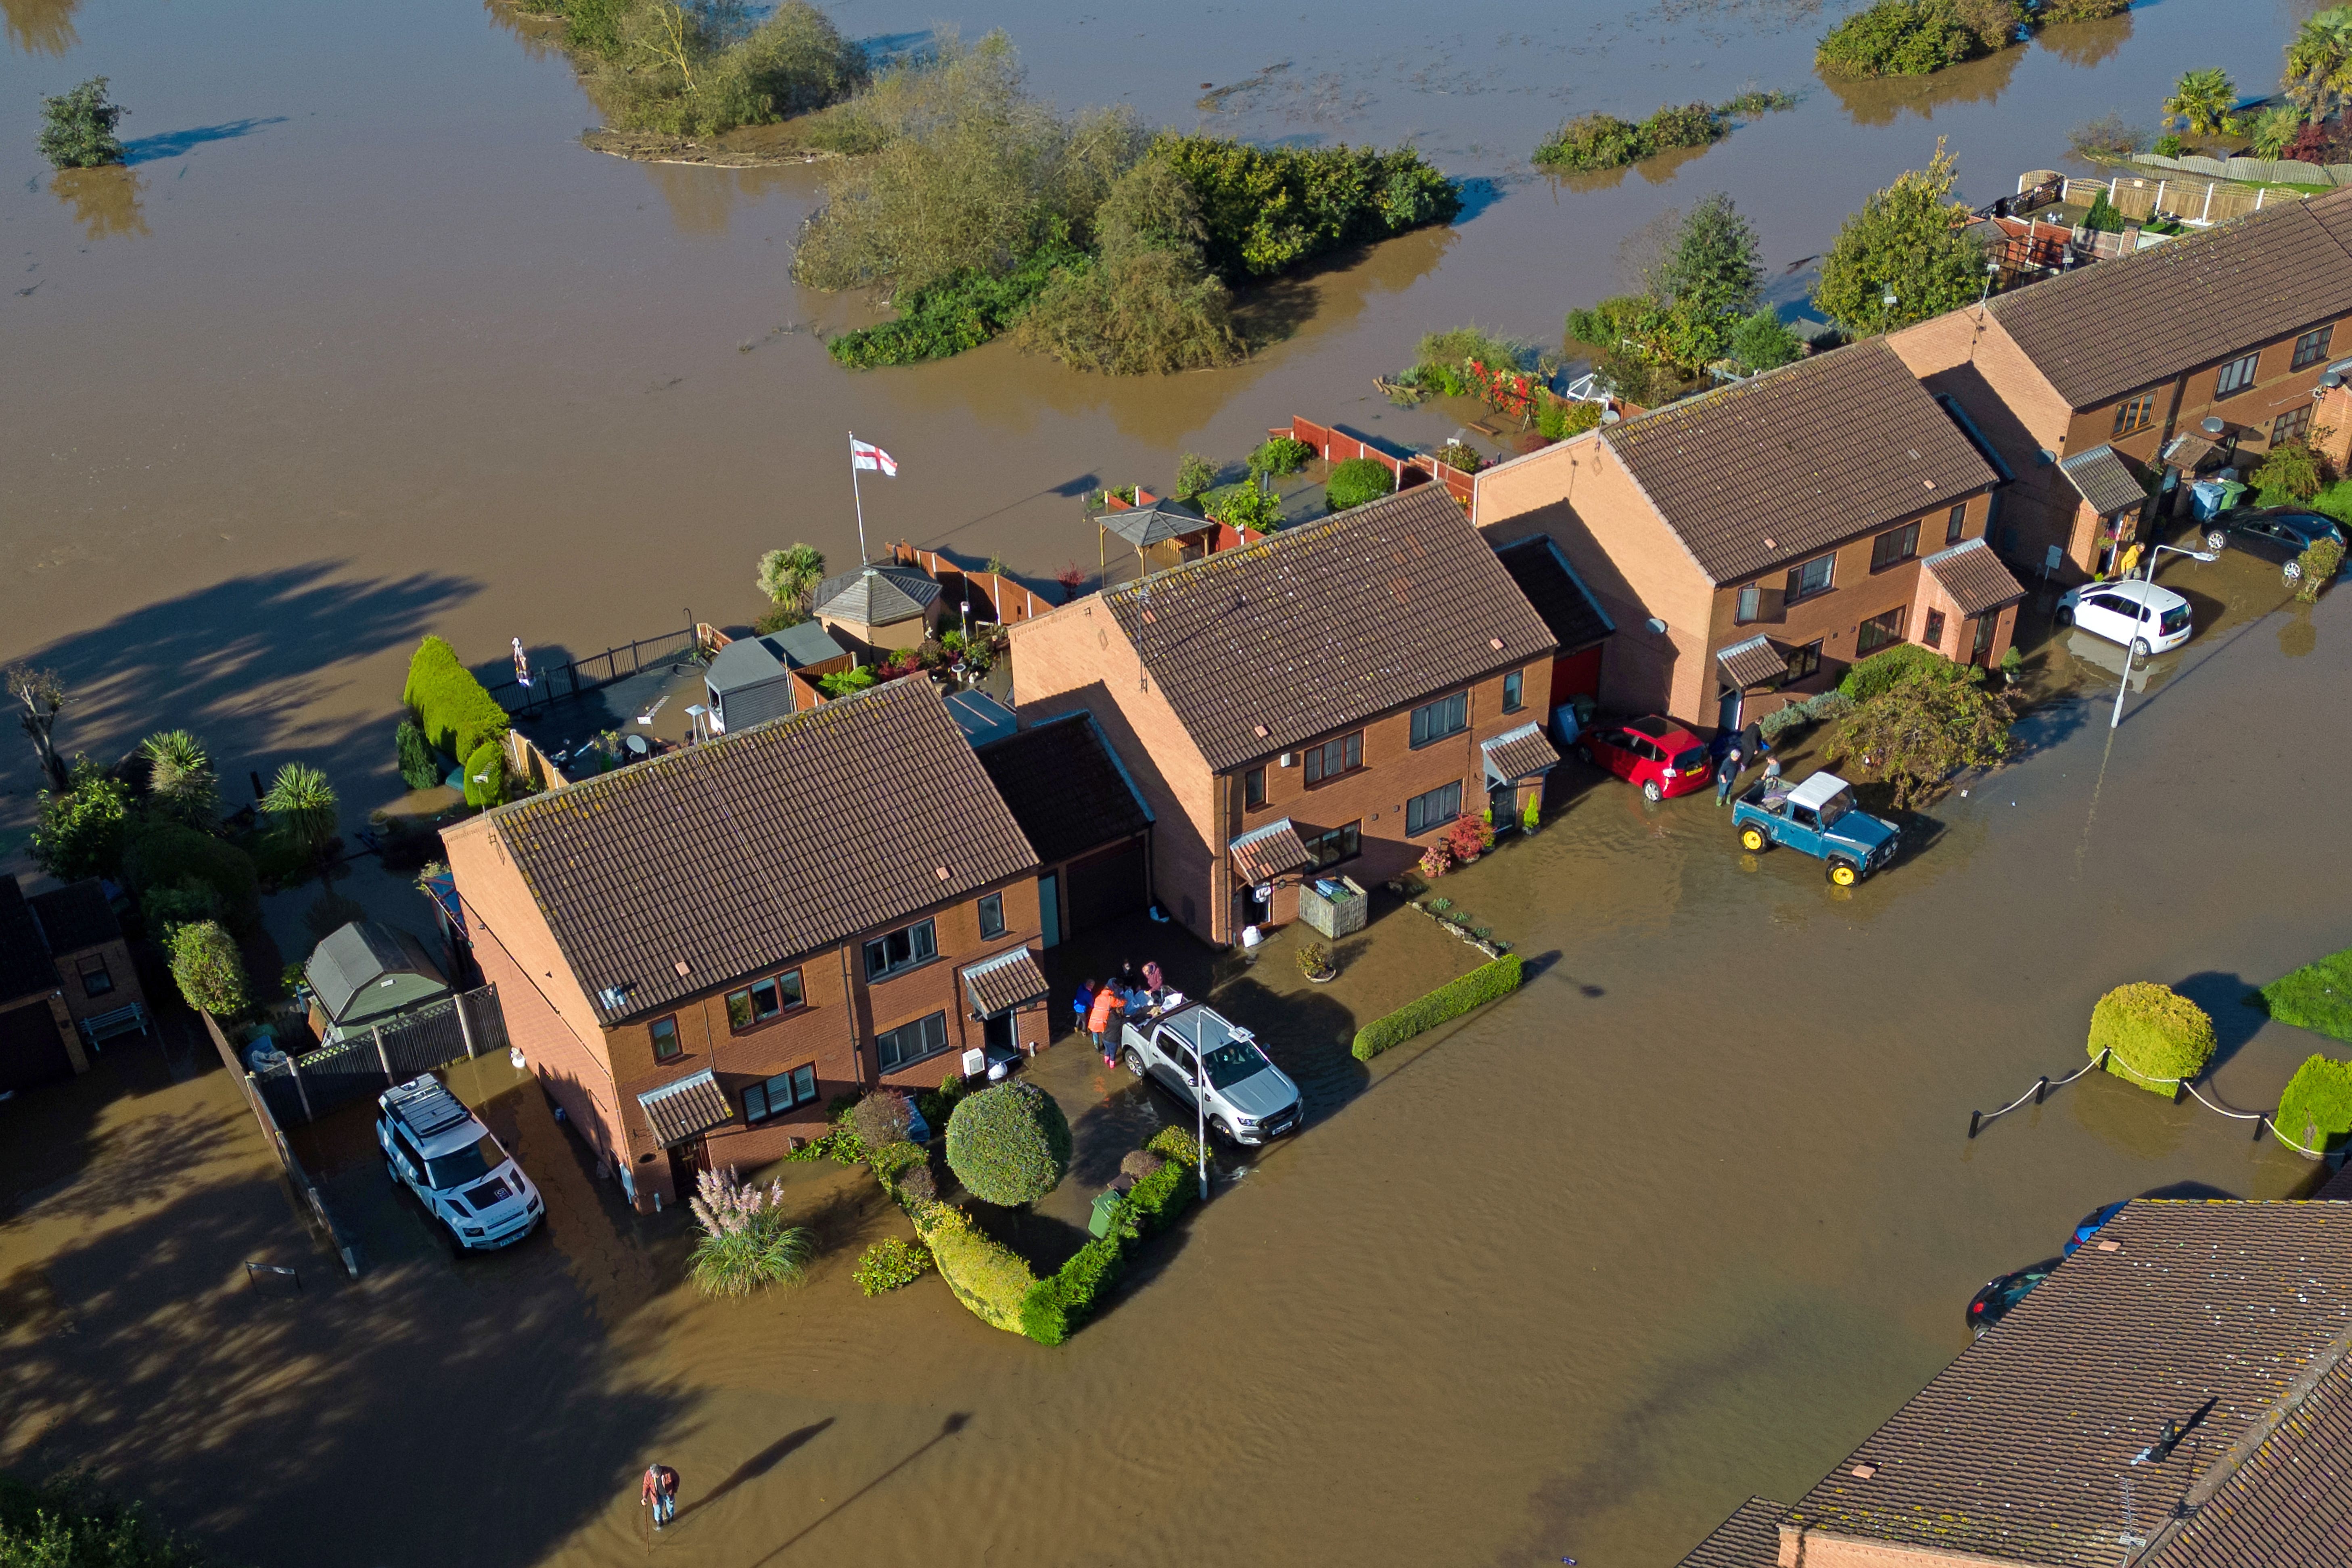 <p>Retford in Nottinghamshire was flooded after Storm Babet battered the UK</p>